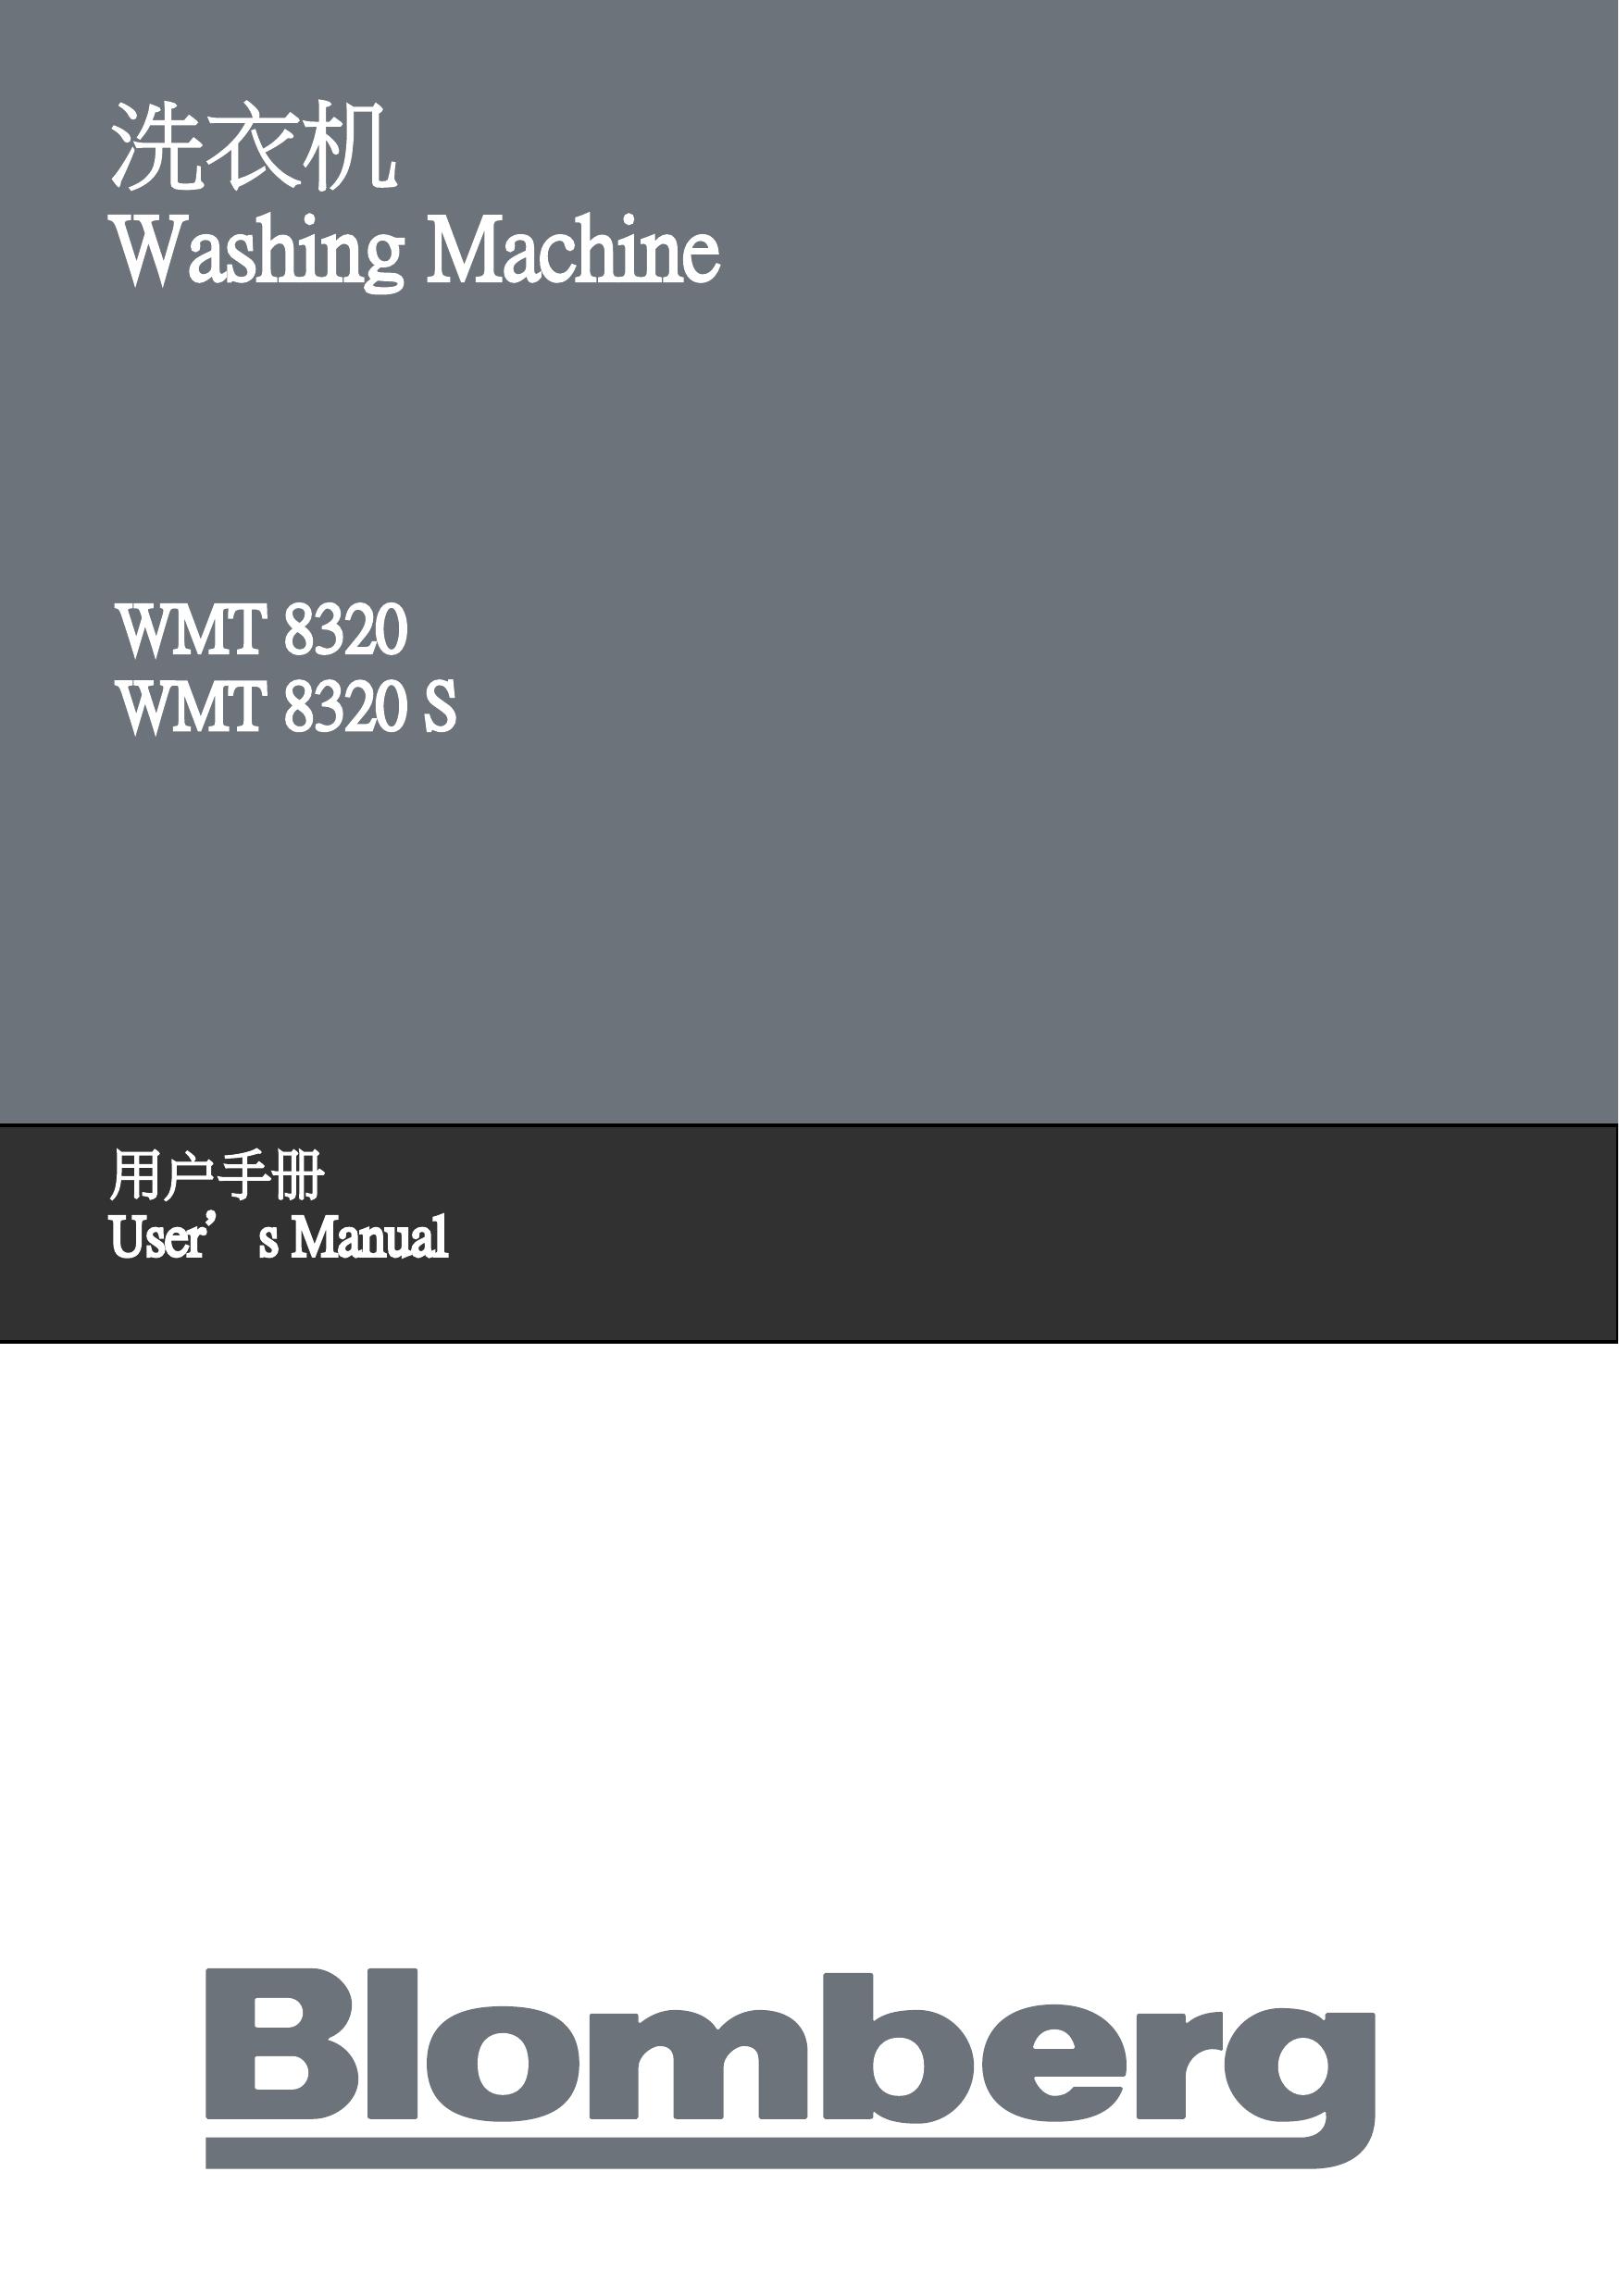 Blomberg WMT 8320 Washer User Manual